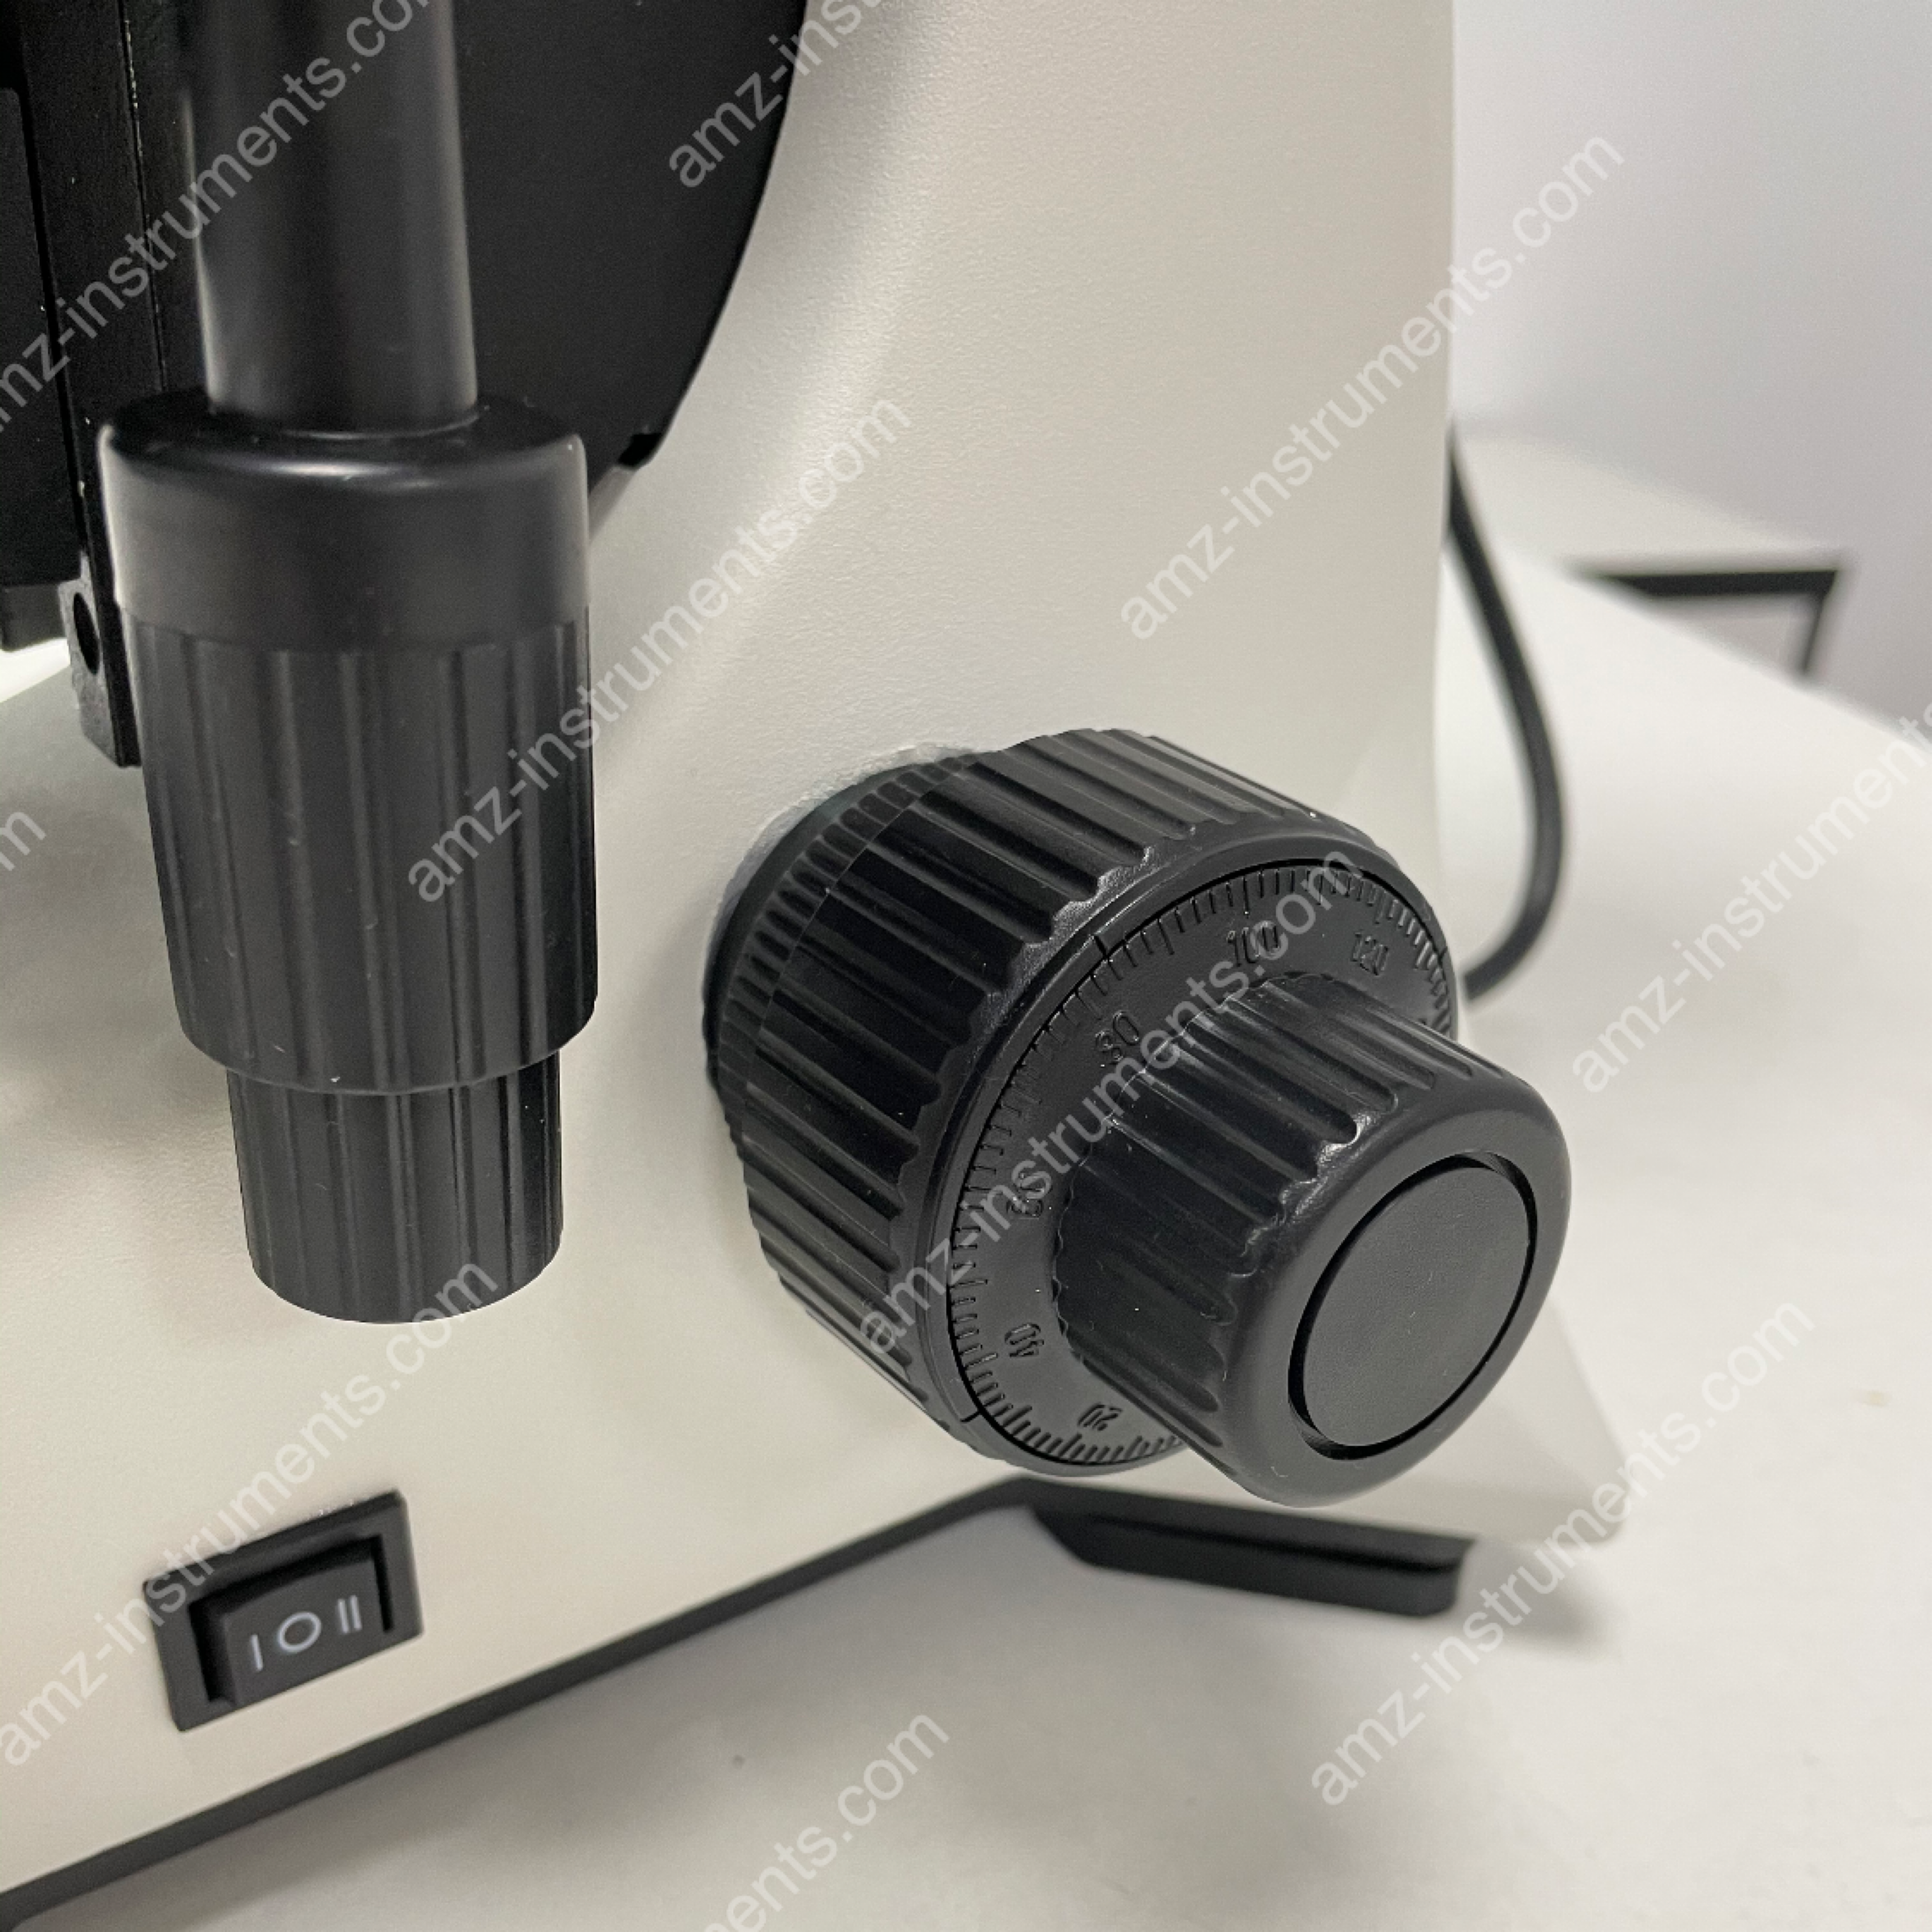 AJX-20TR 50x-1000x Trinocular Metallographic Microscope with Polarization Attachment